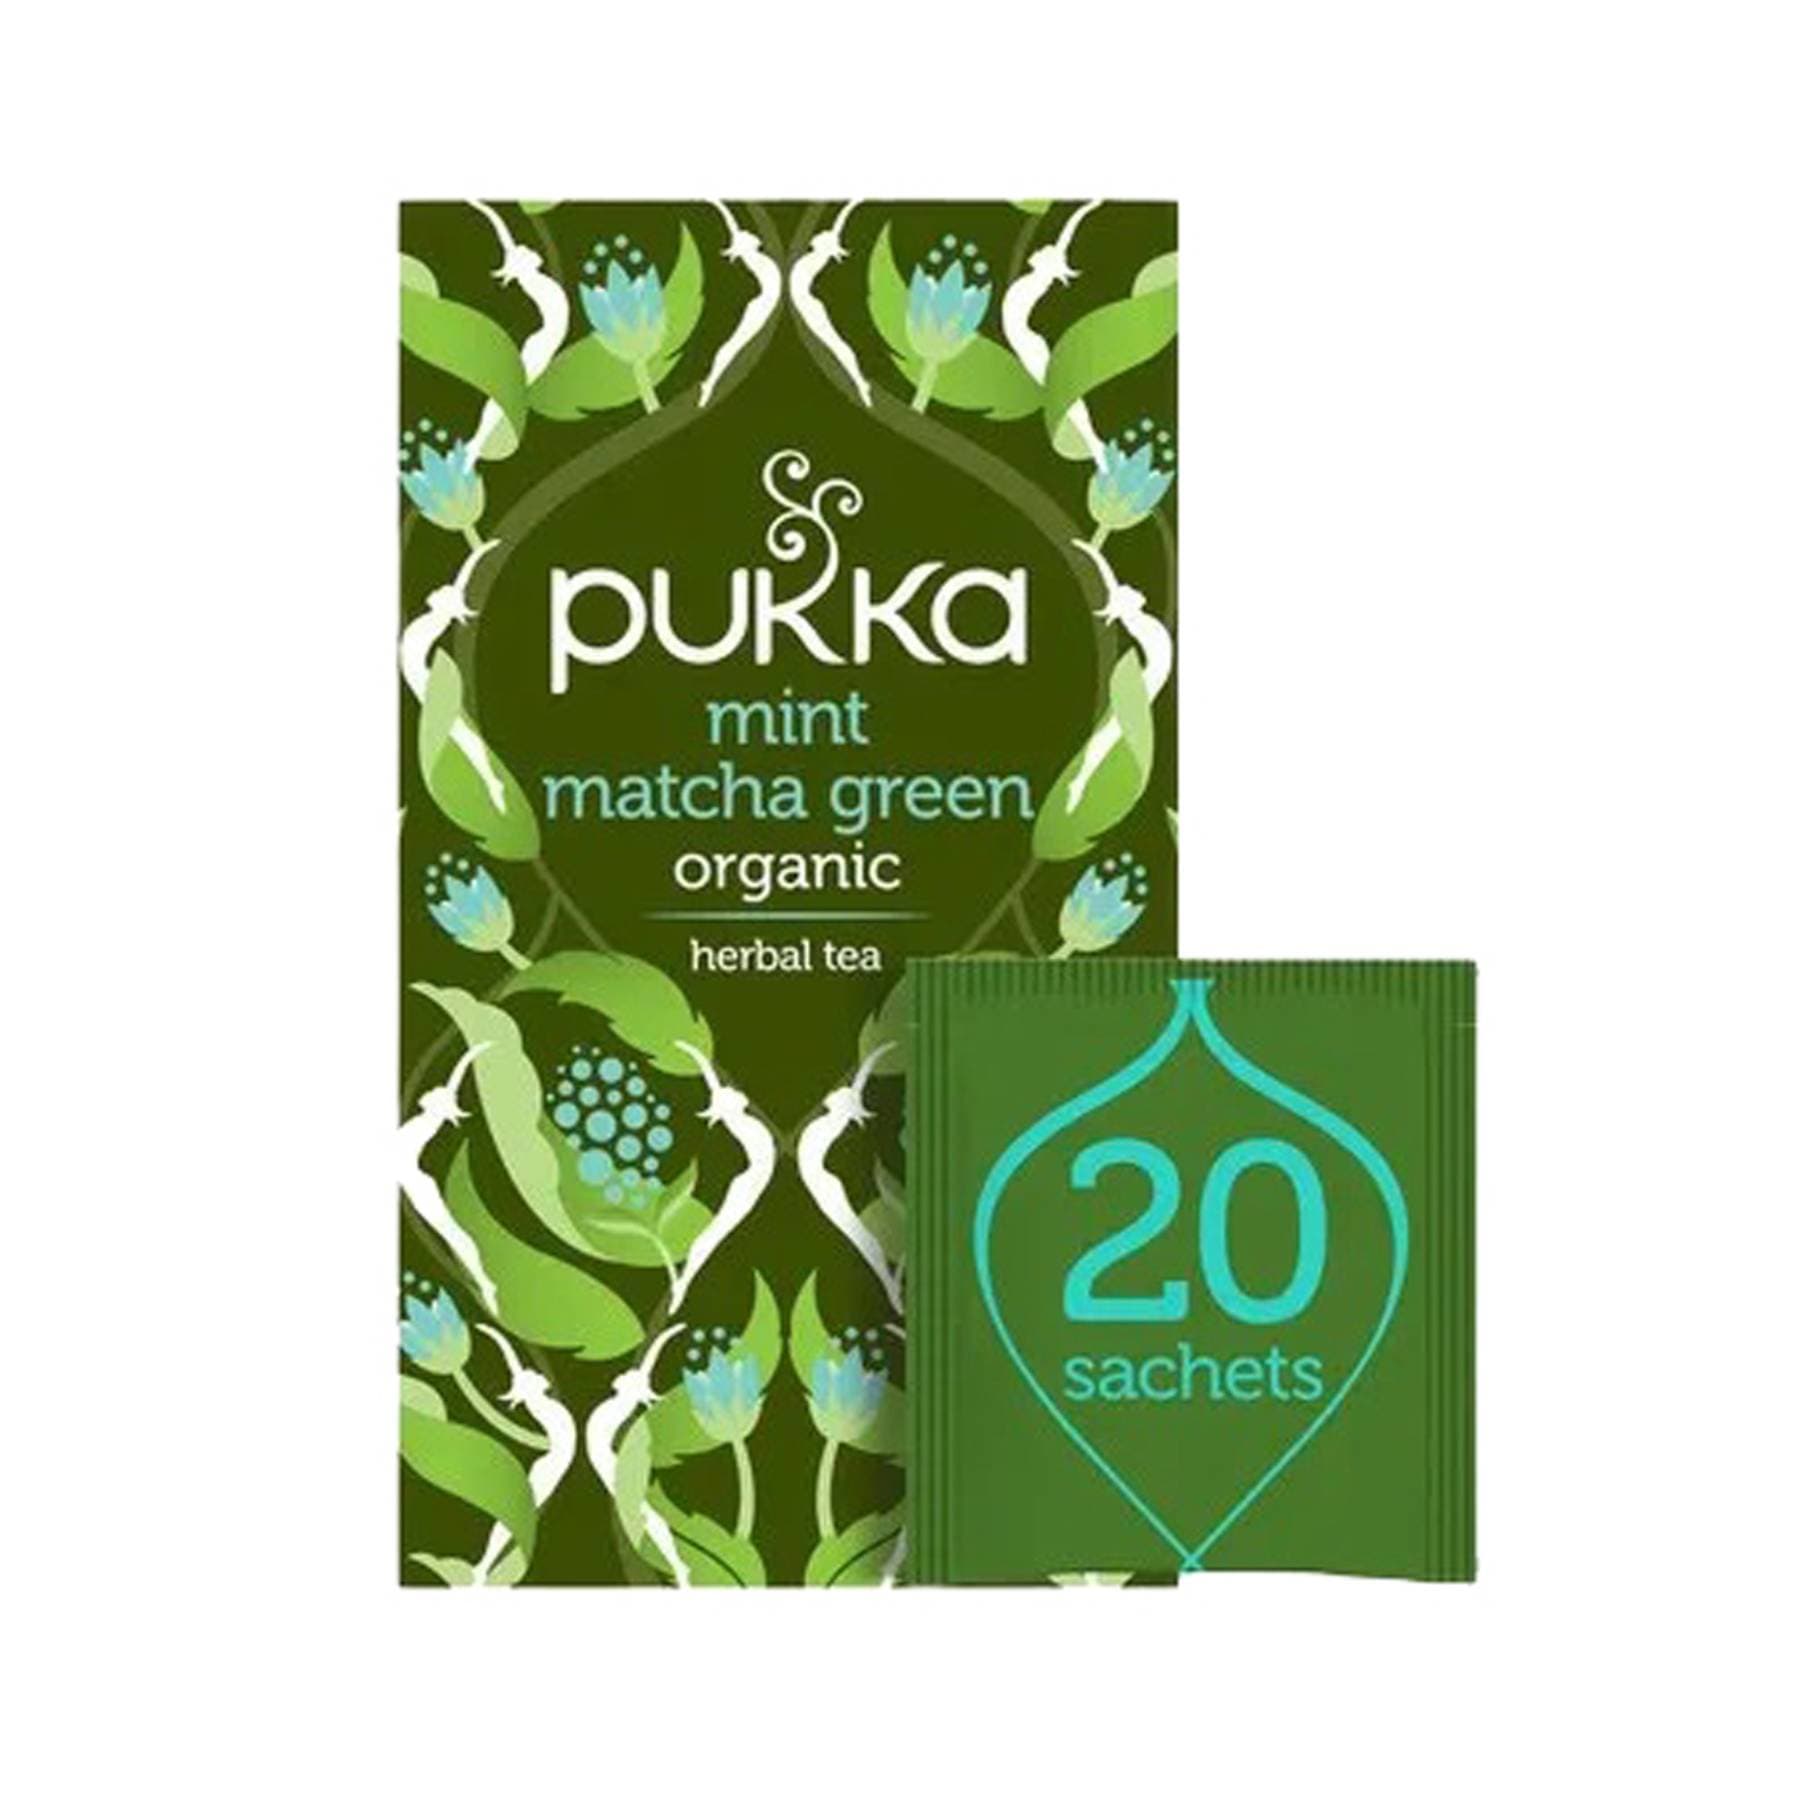 Pukka mint matcha green 20 tea bags